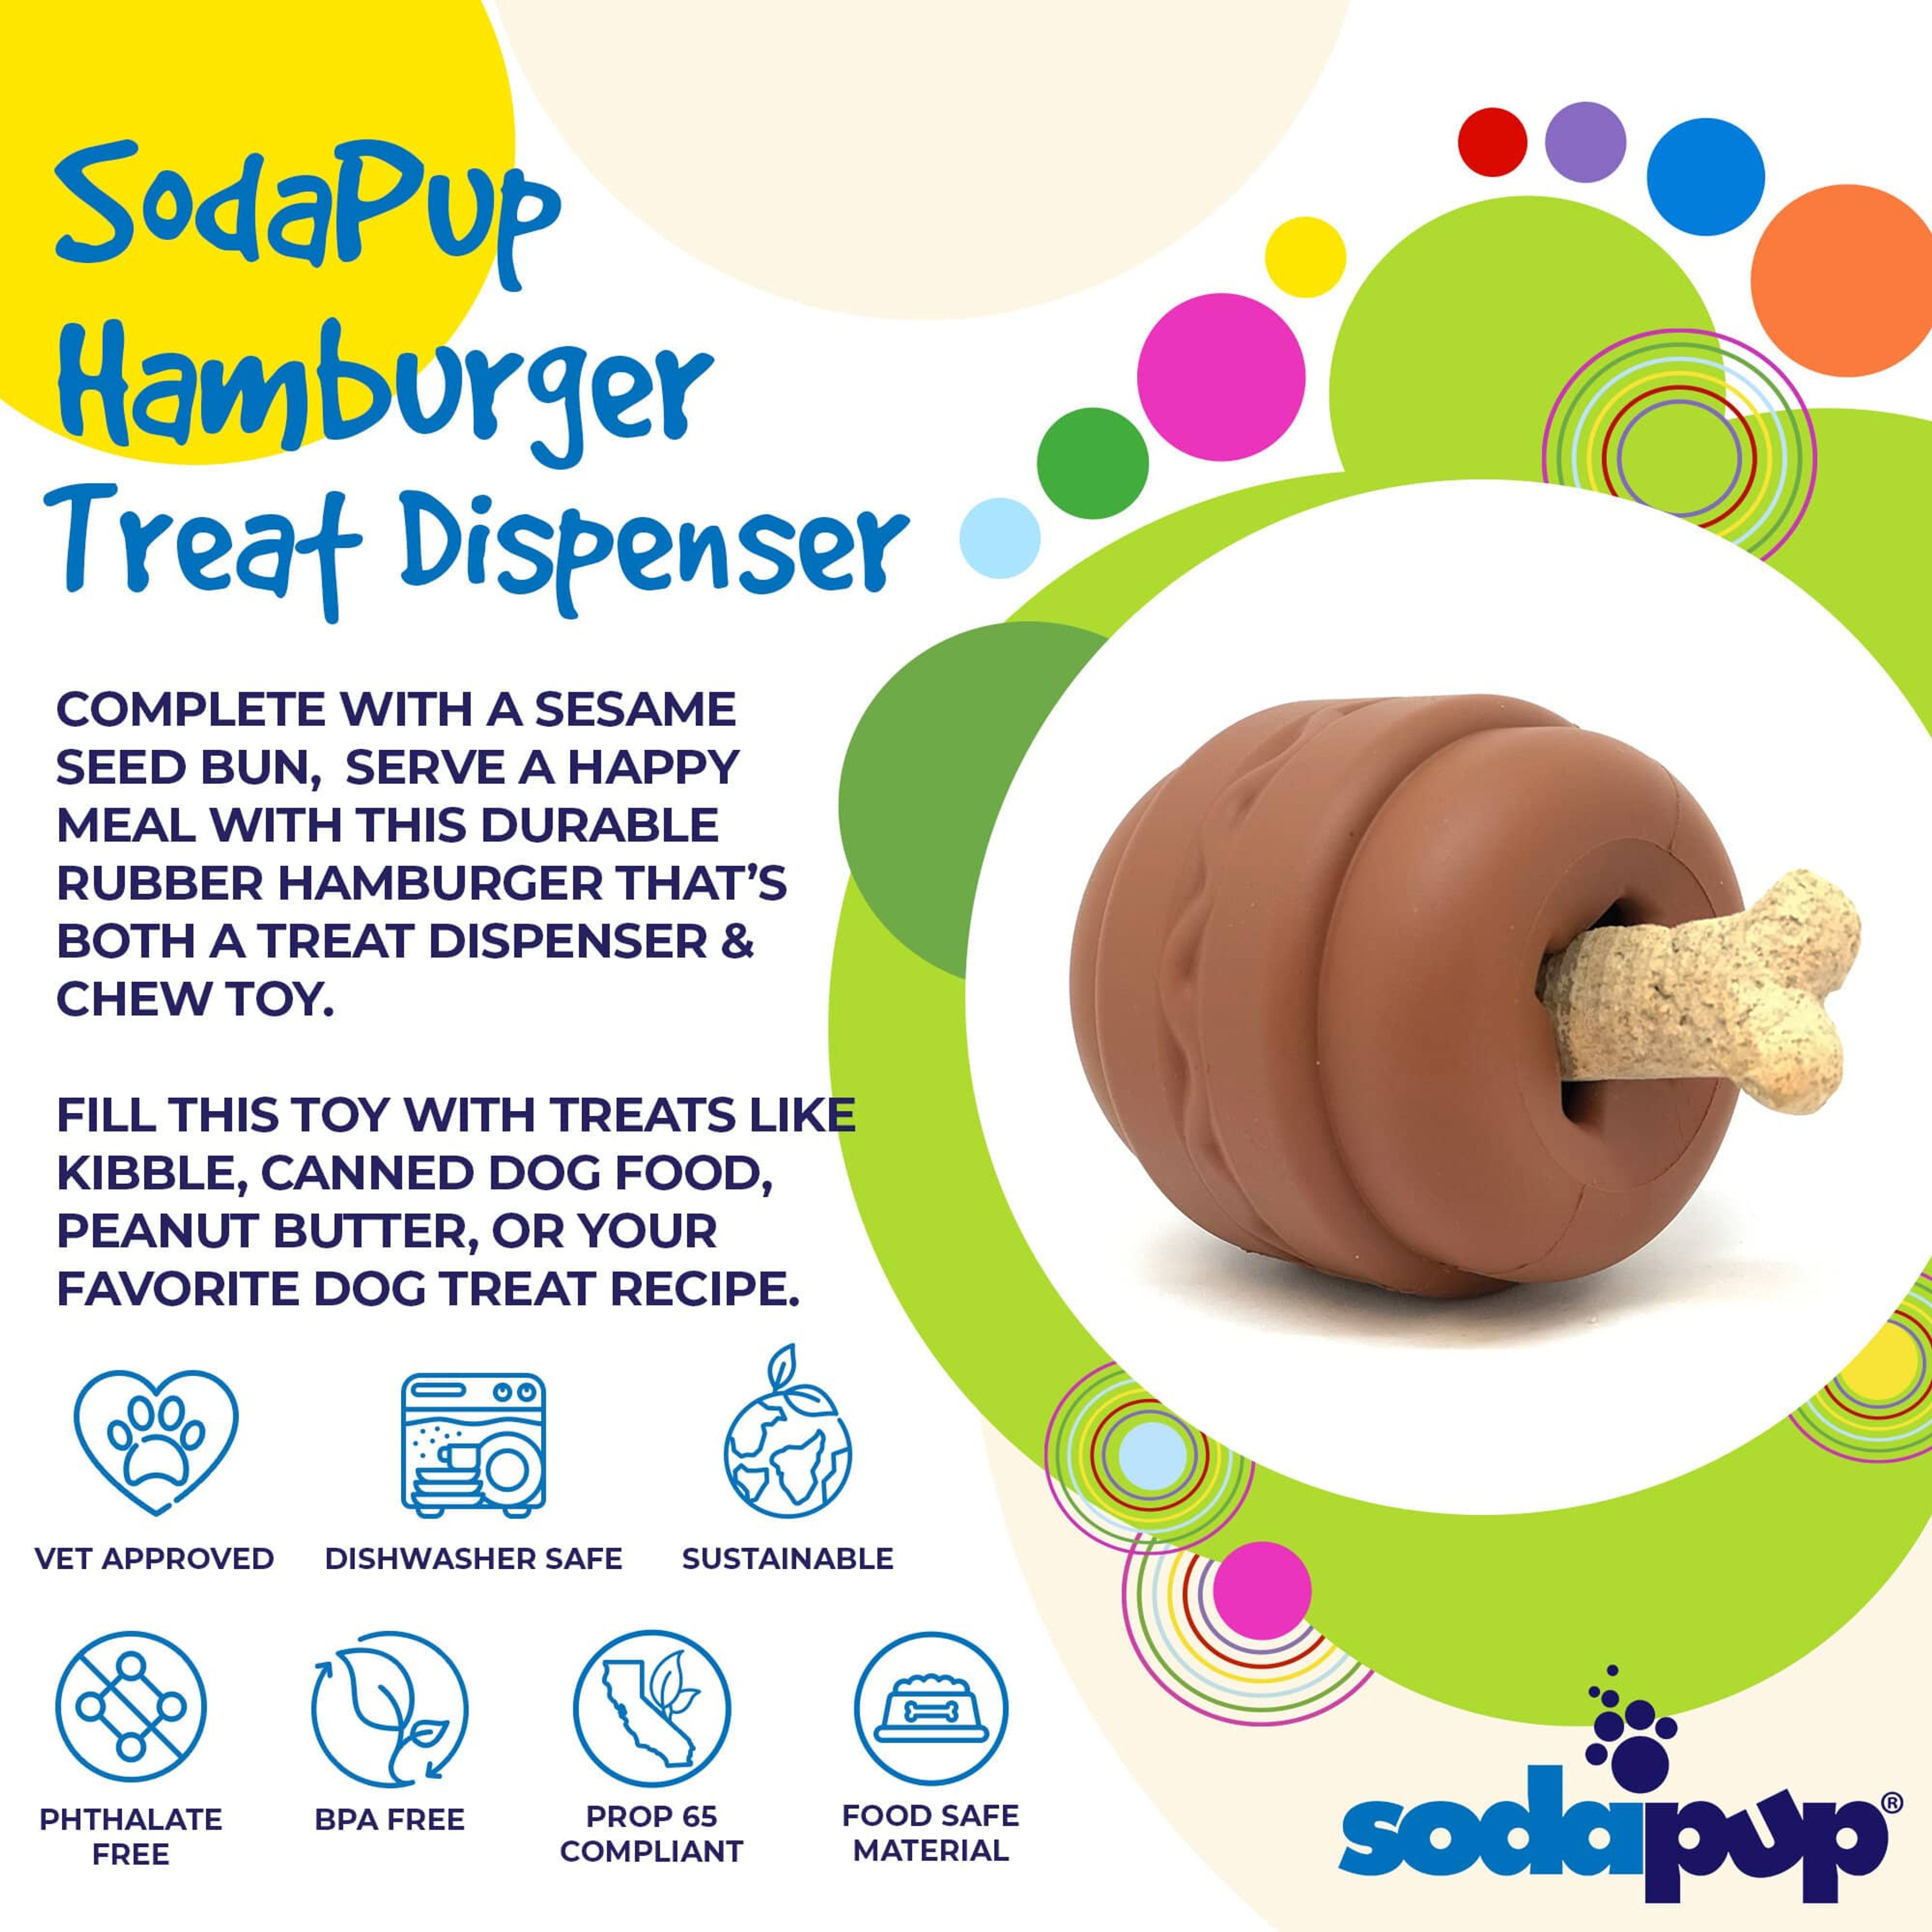 Hamburger Durable Rubber Chew Toy & Treat Dispenser  - Large